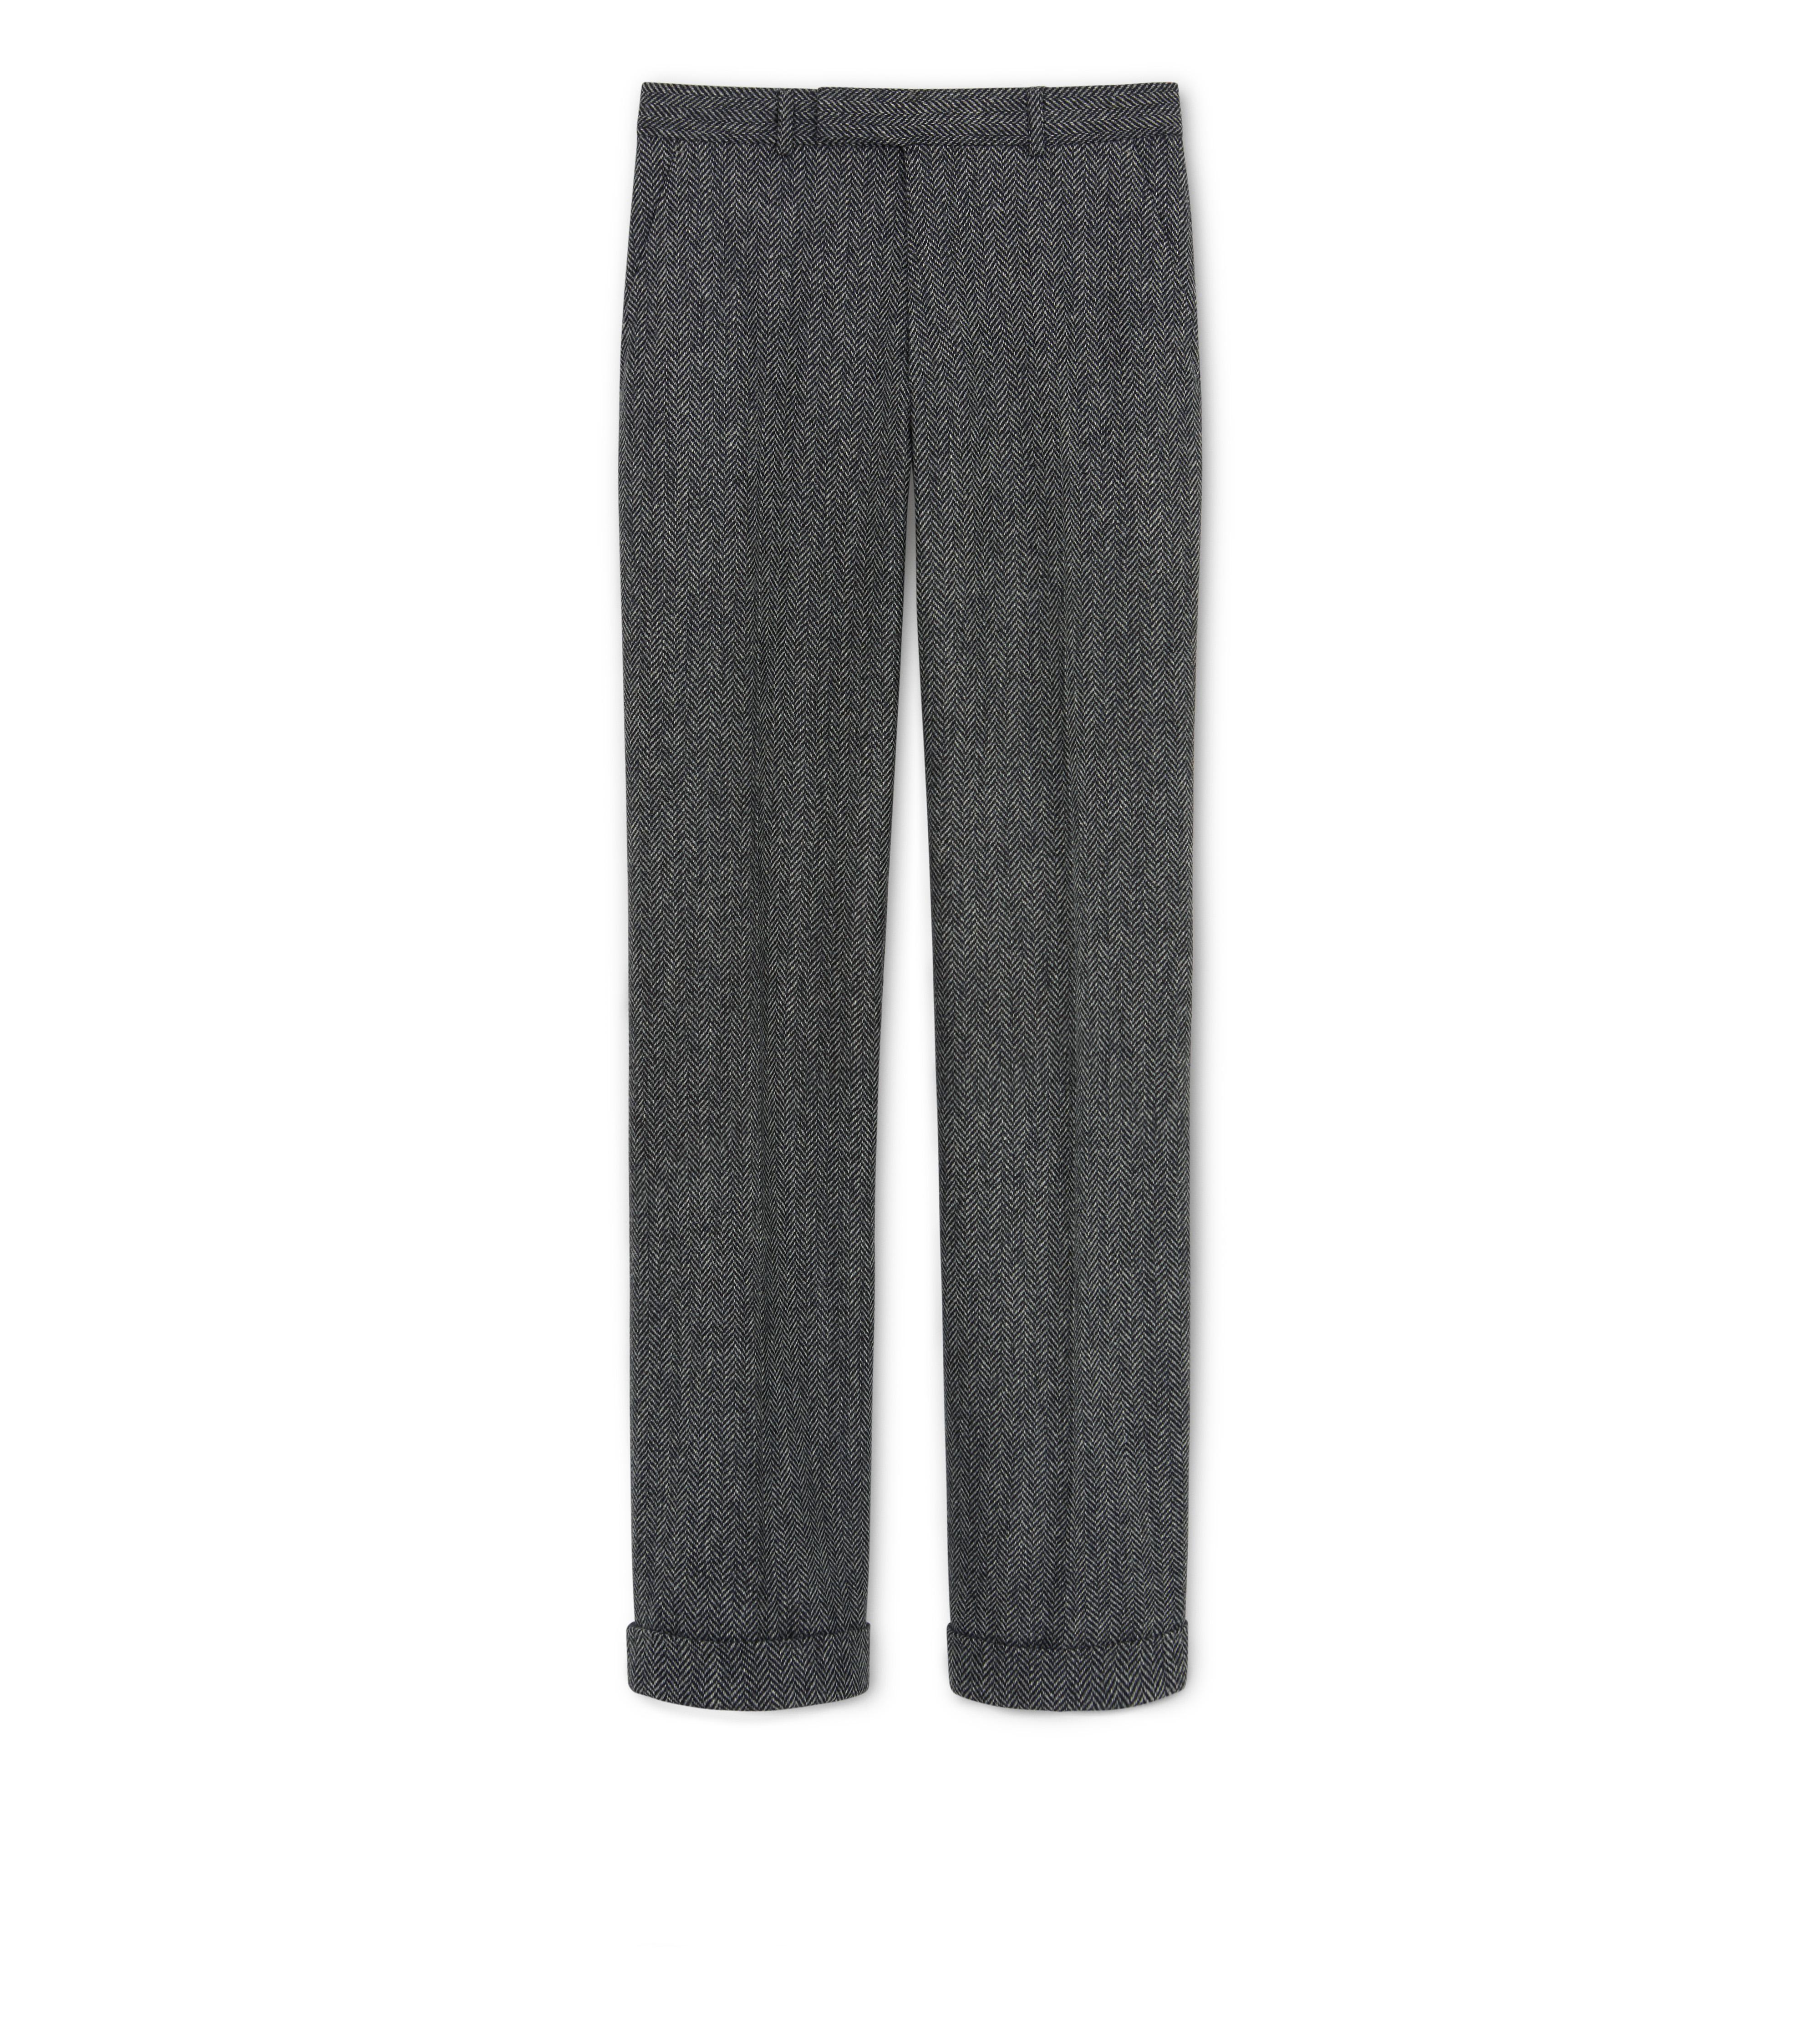 Pants - Men's Pants by TOM FORD - Designer Trousers & Pants for Men ...